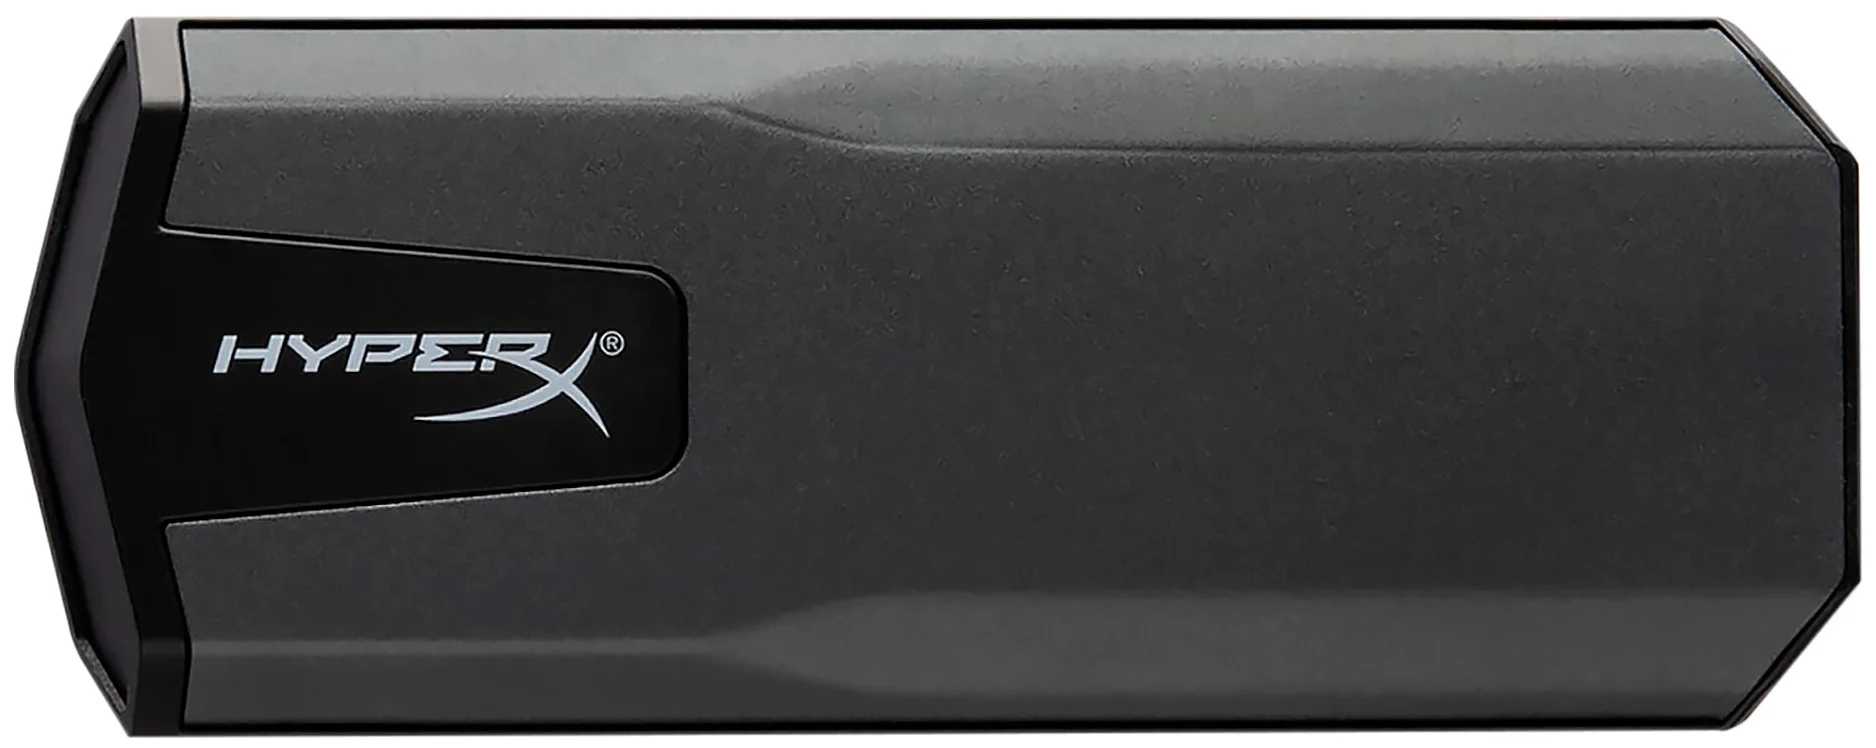 SSD HyperX SAVAGE EXO - вес: 56 г